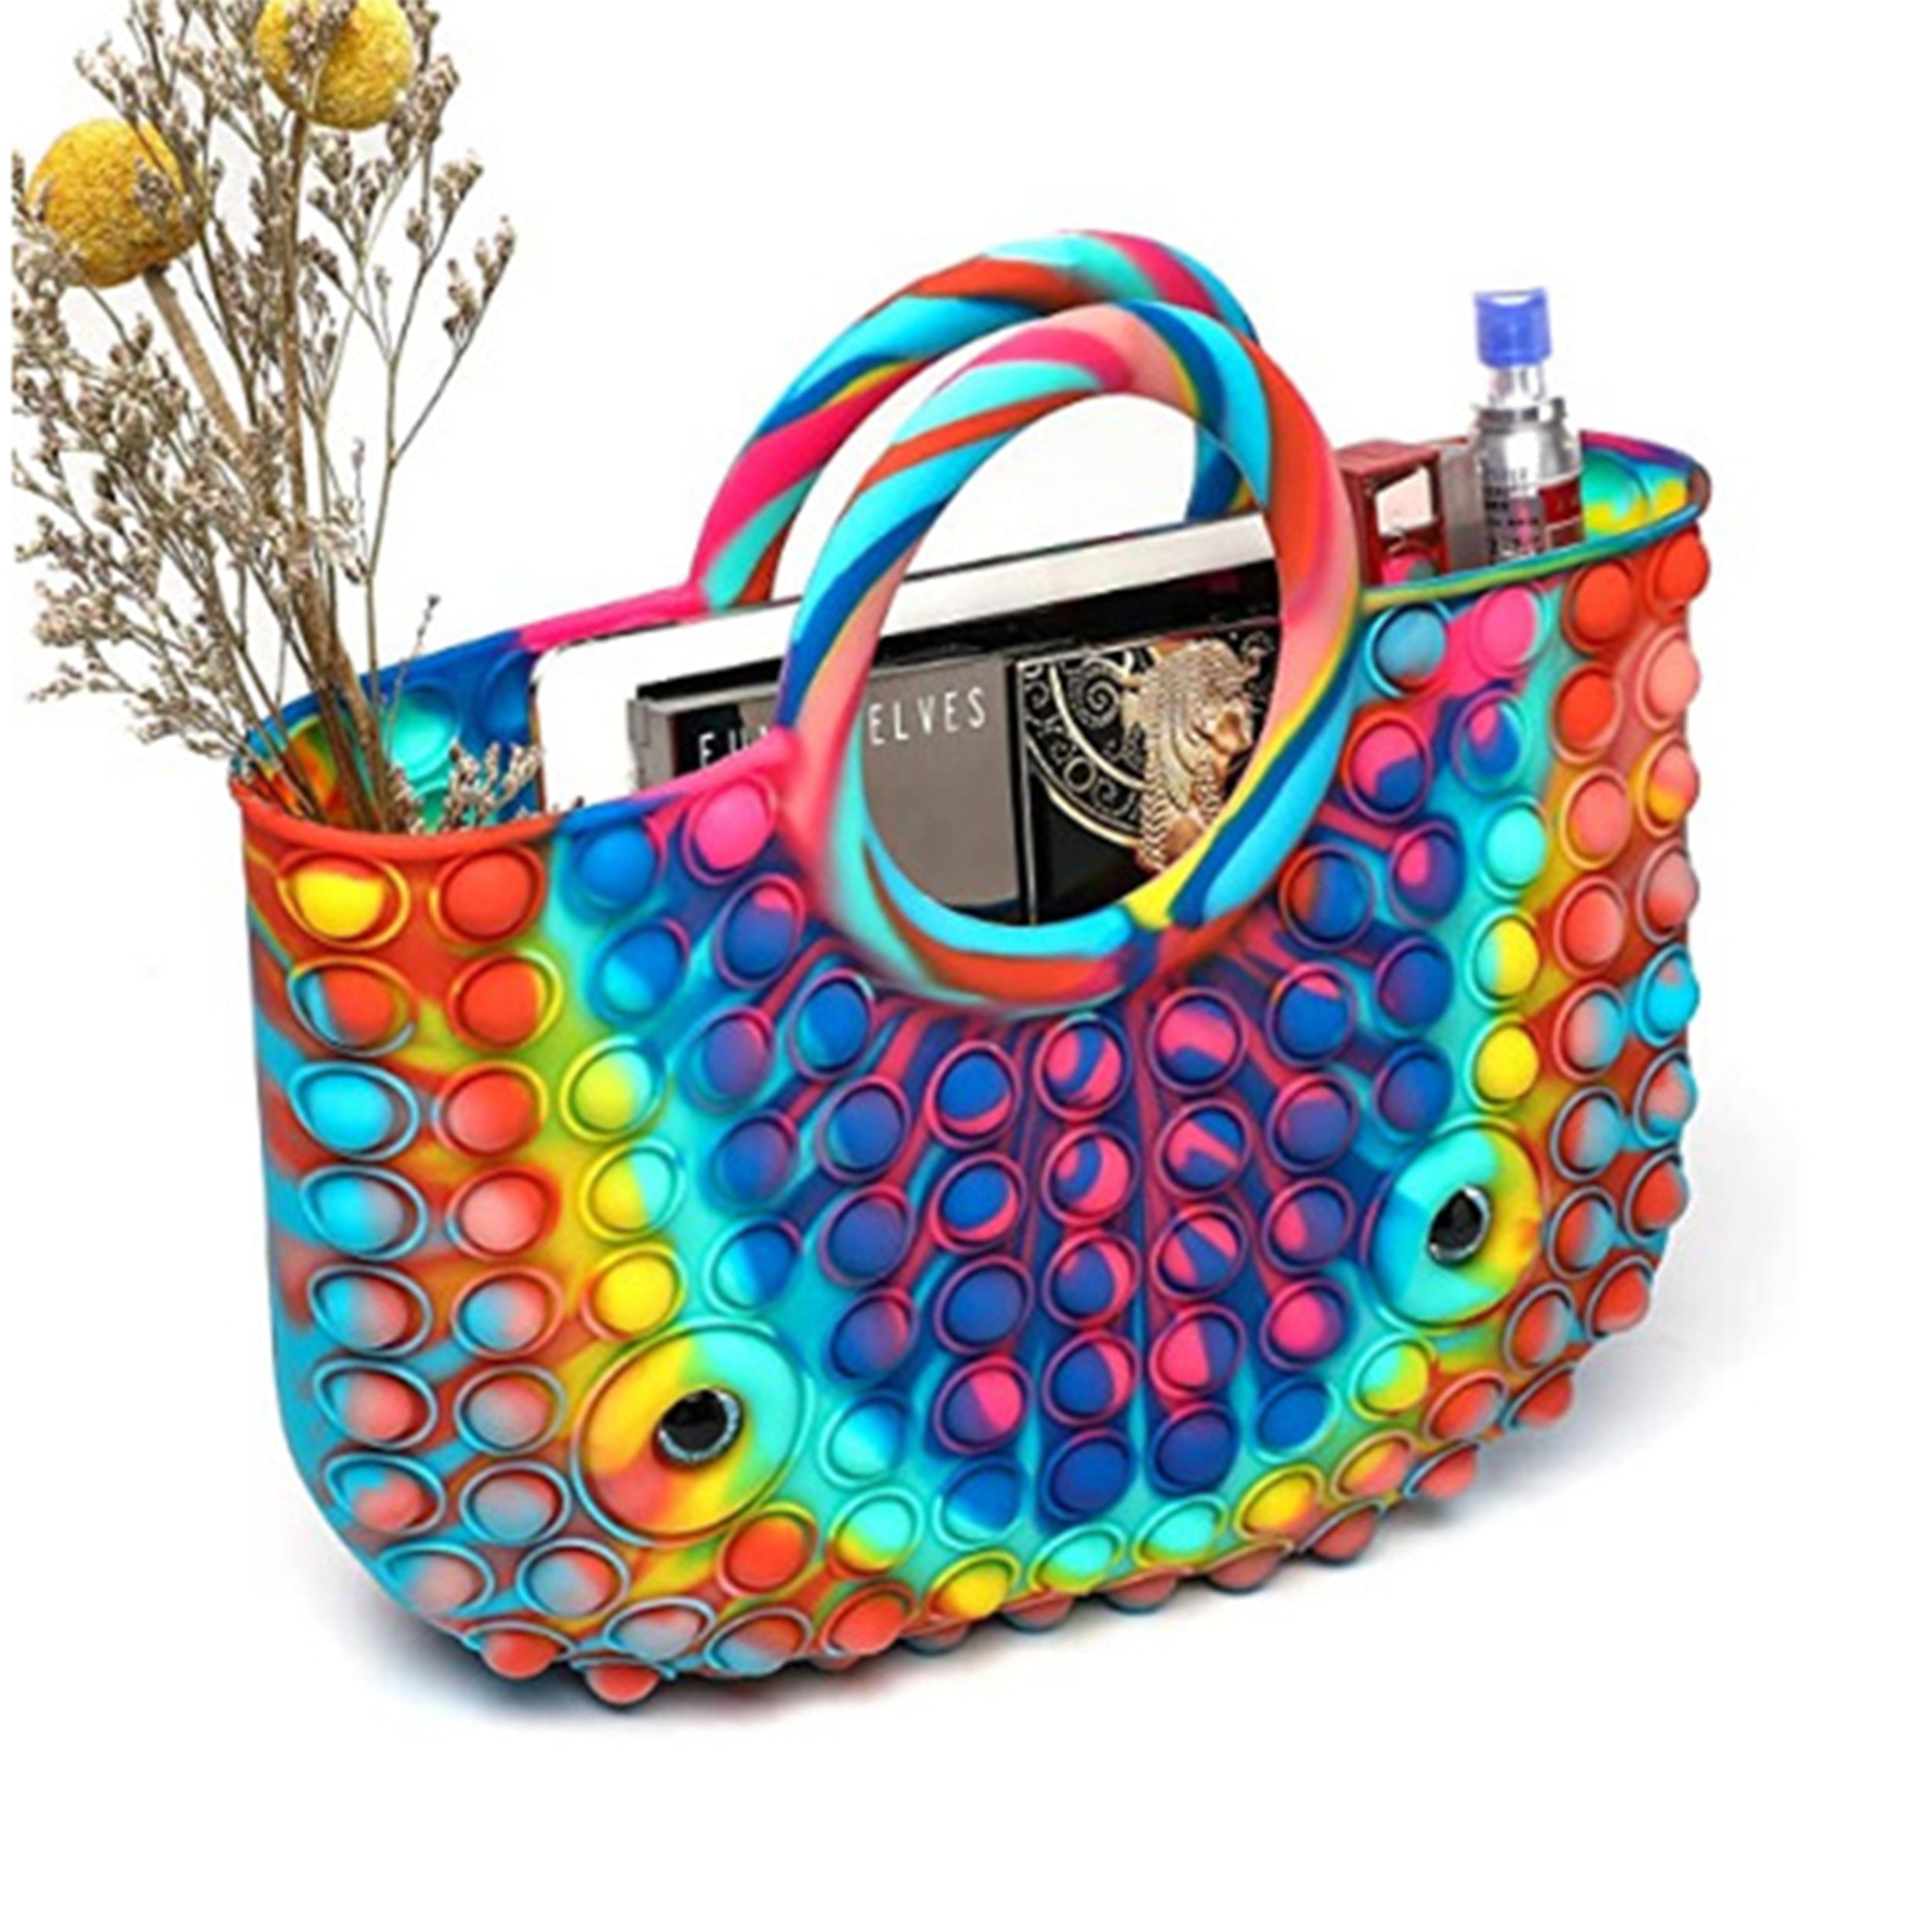 Rainbow Tote Bag Pop It Toy